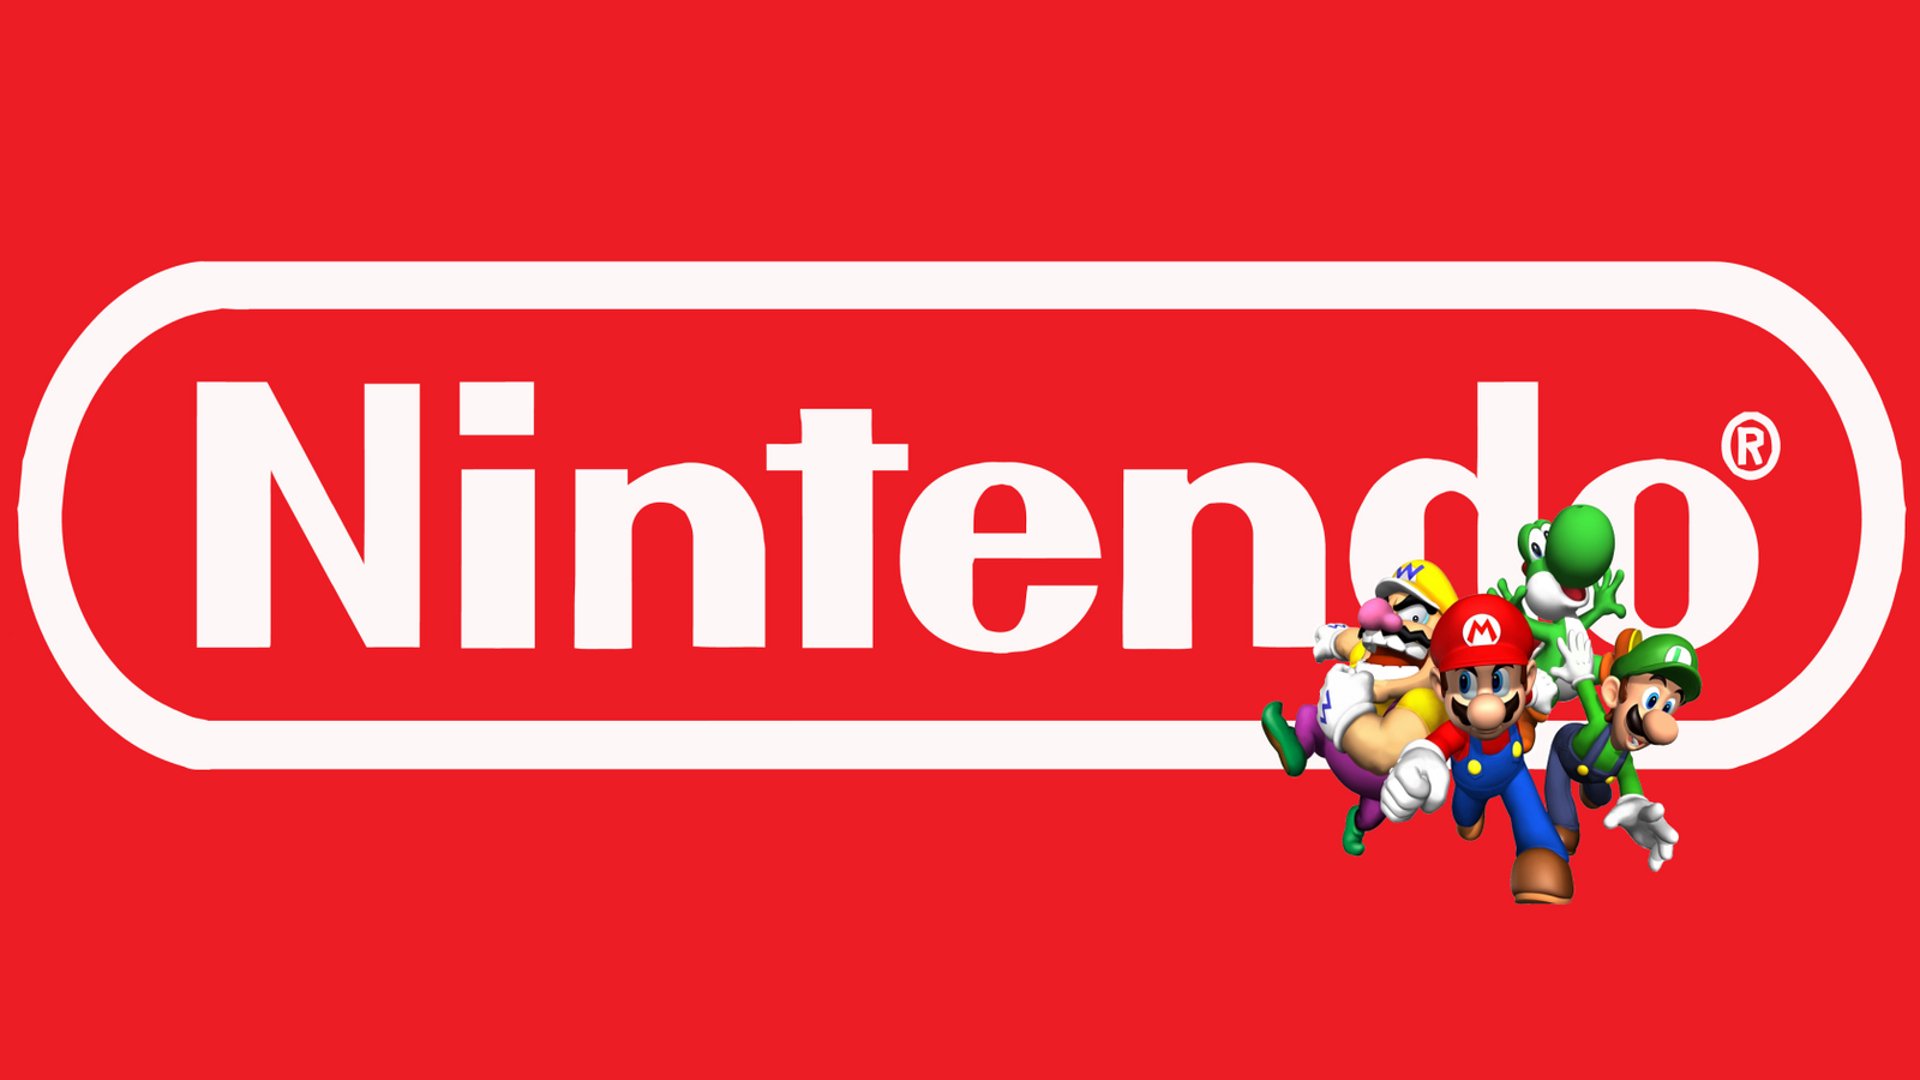 Nintendo club. Нинтендокор. Ринсэндо. Нинтендо компания. Nintendo лого.